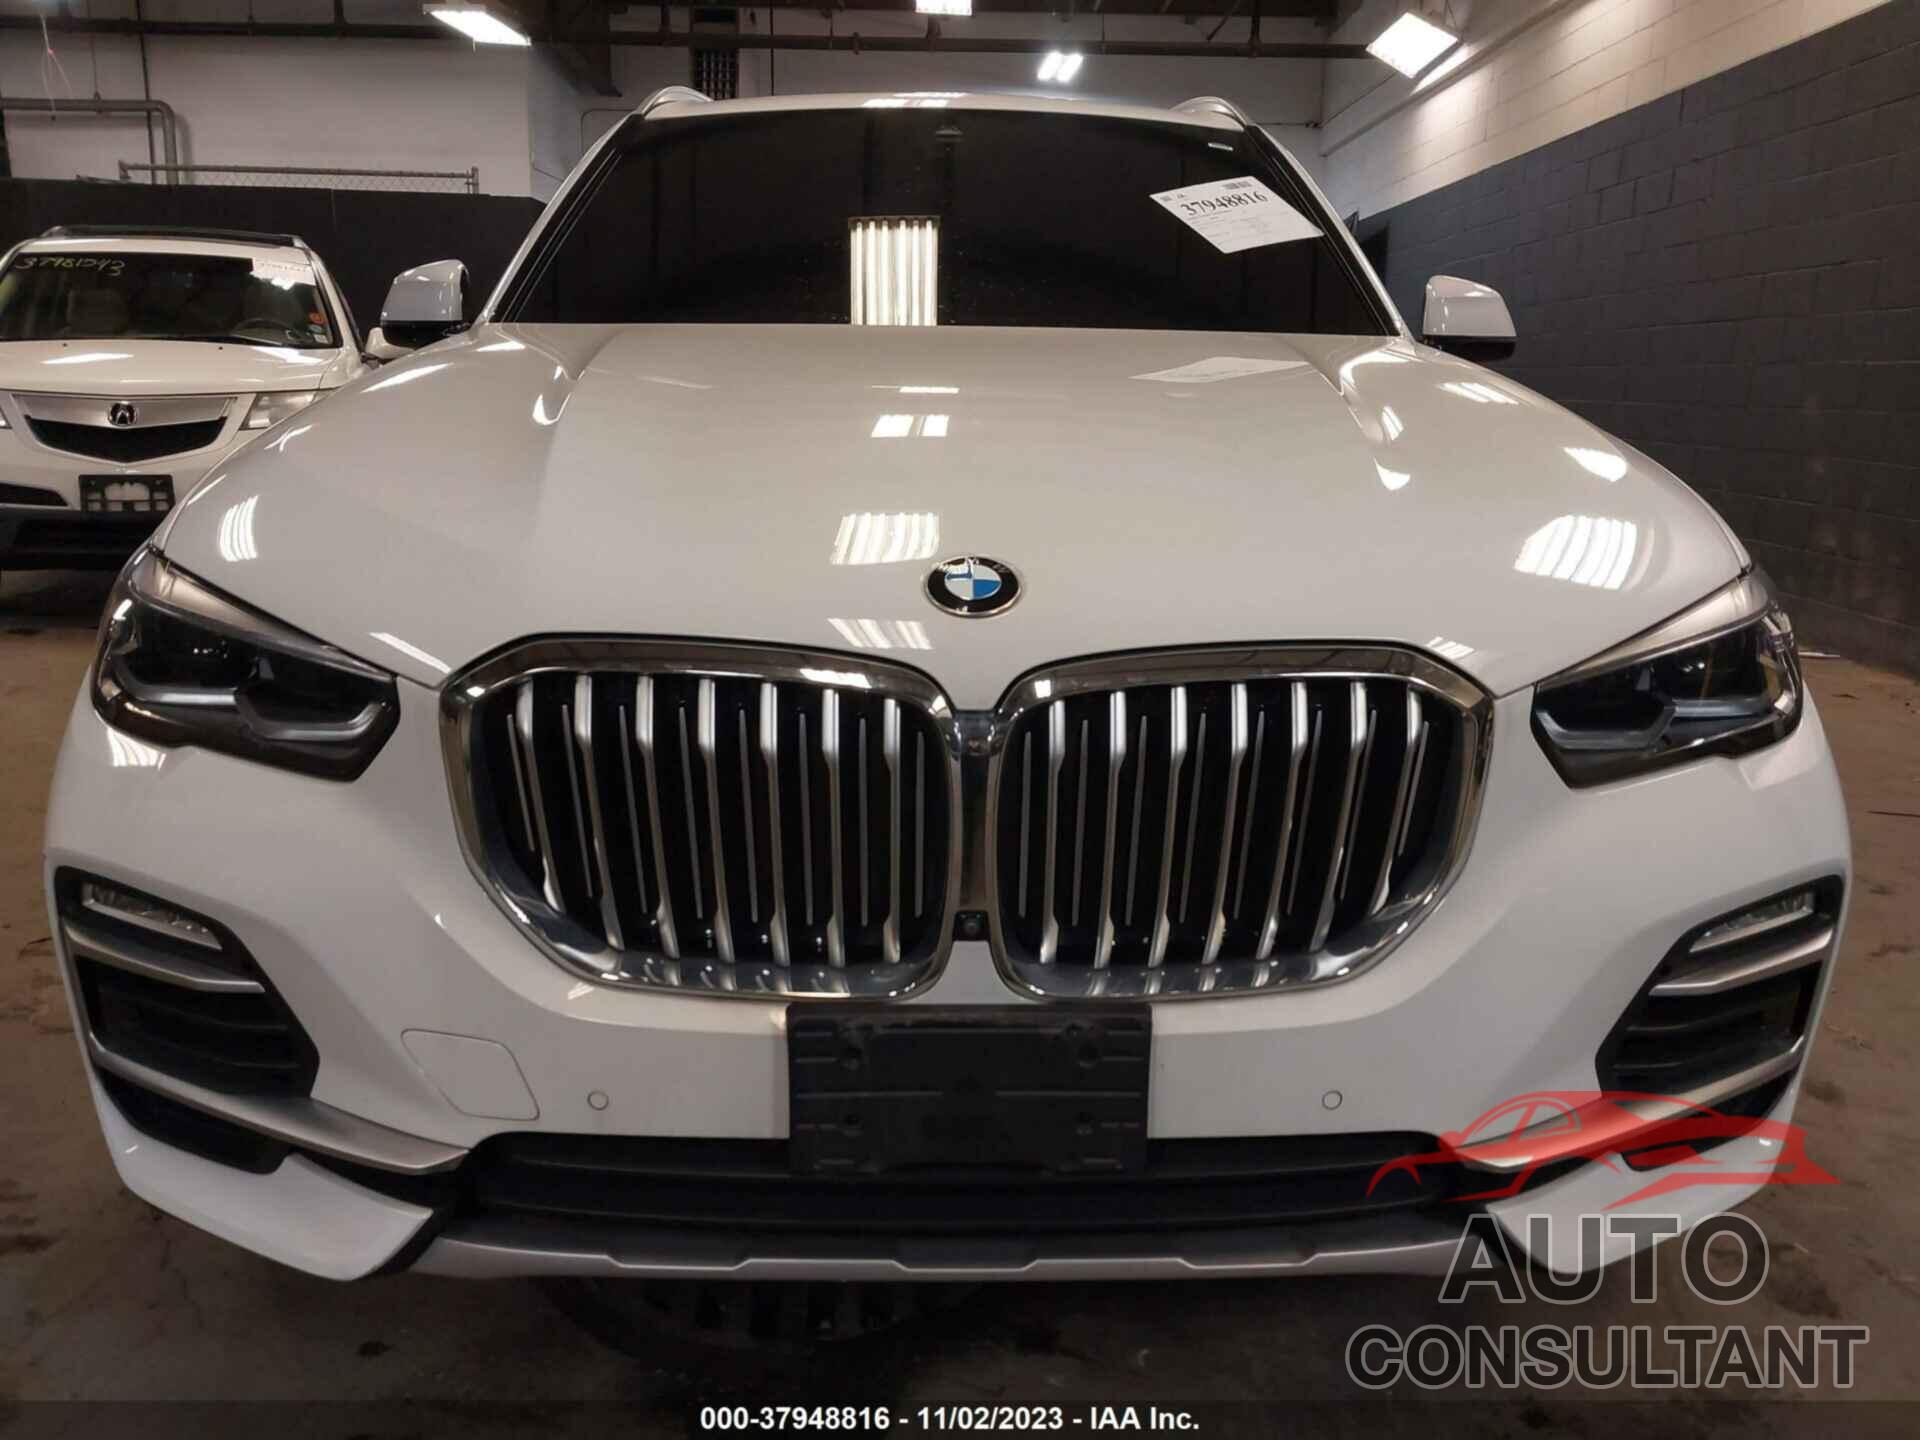 BMW X5 2020 - 5UXCR6C07L9B89099